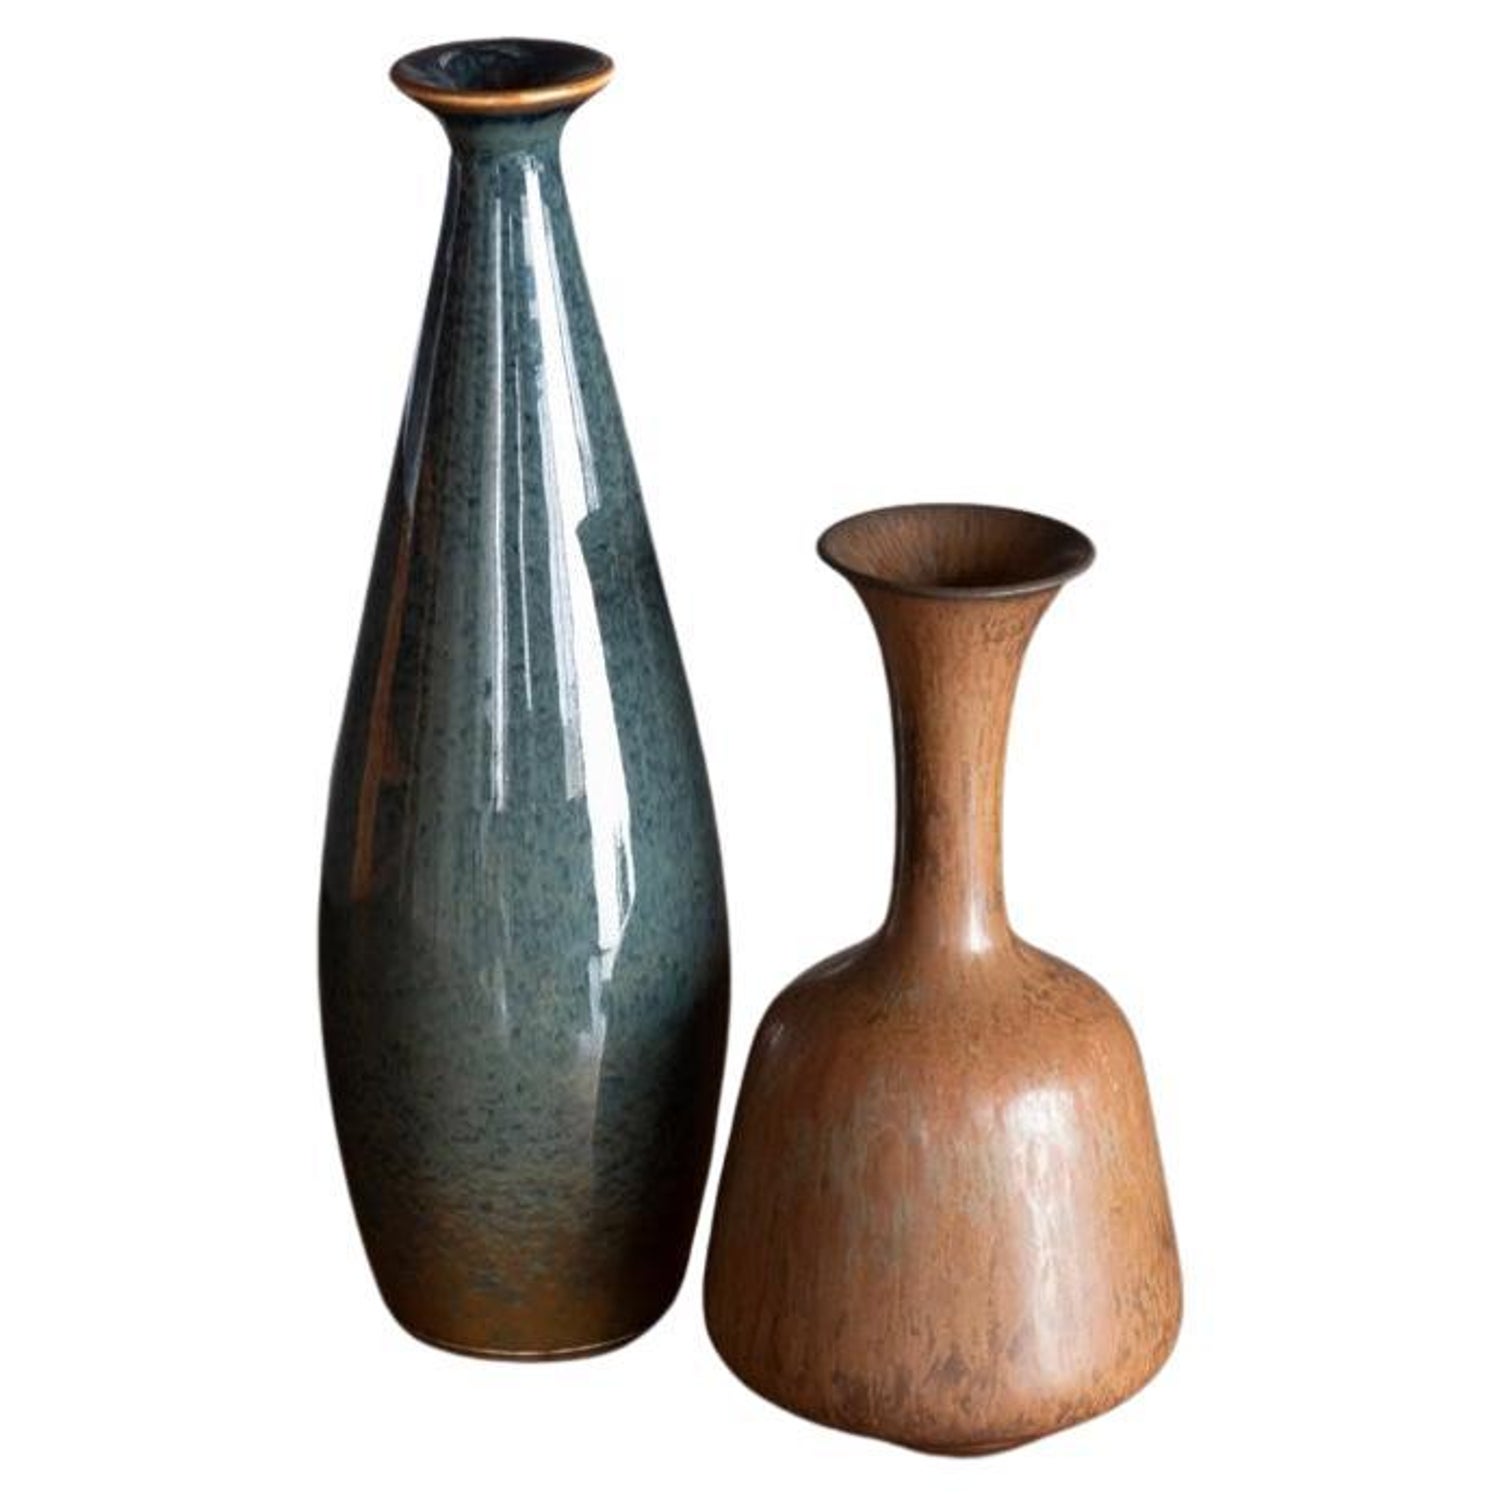 https://a.1stdibscdn.com/pair-of-swedish-midcentury-ceramic-bud-vases-for-sale/f_7972/f_281589921649448067244/f_28158992_1649448067432_bg_processed.jpg?width=1500